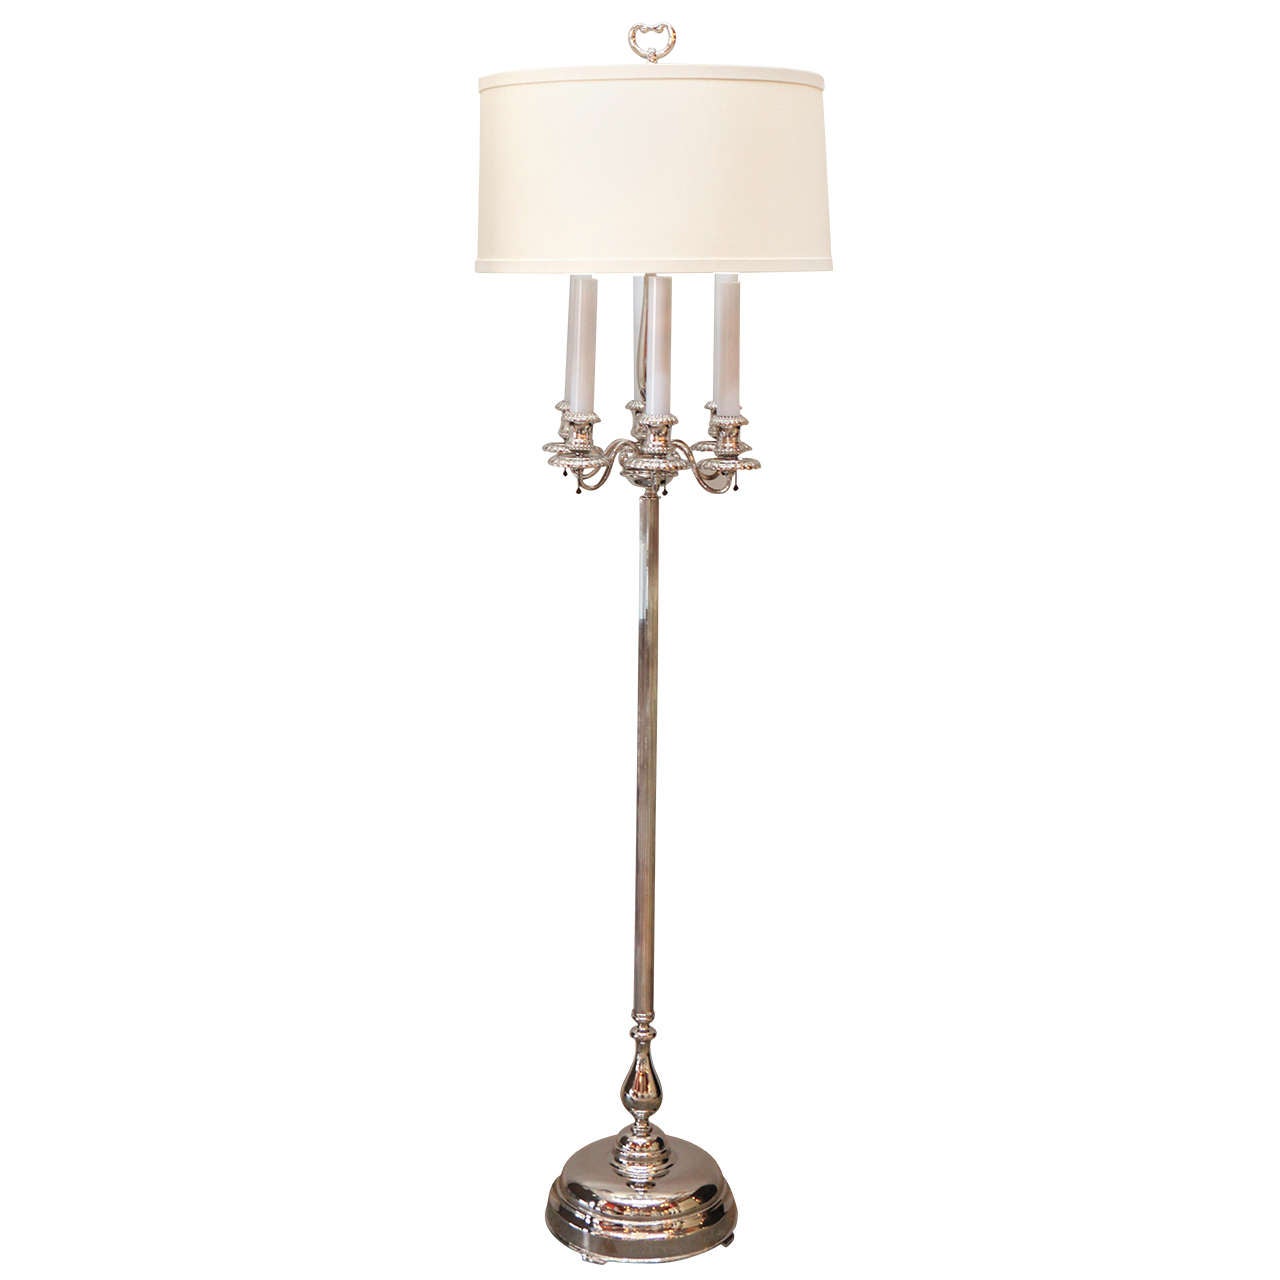 Georgian Style Candelabra Floor Lamp For Sale